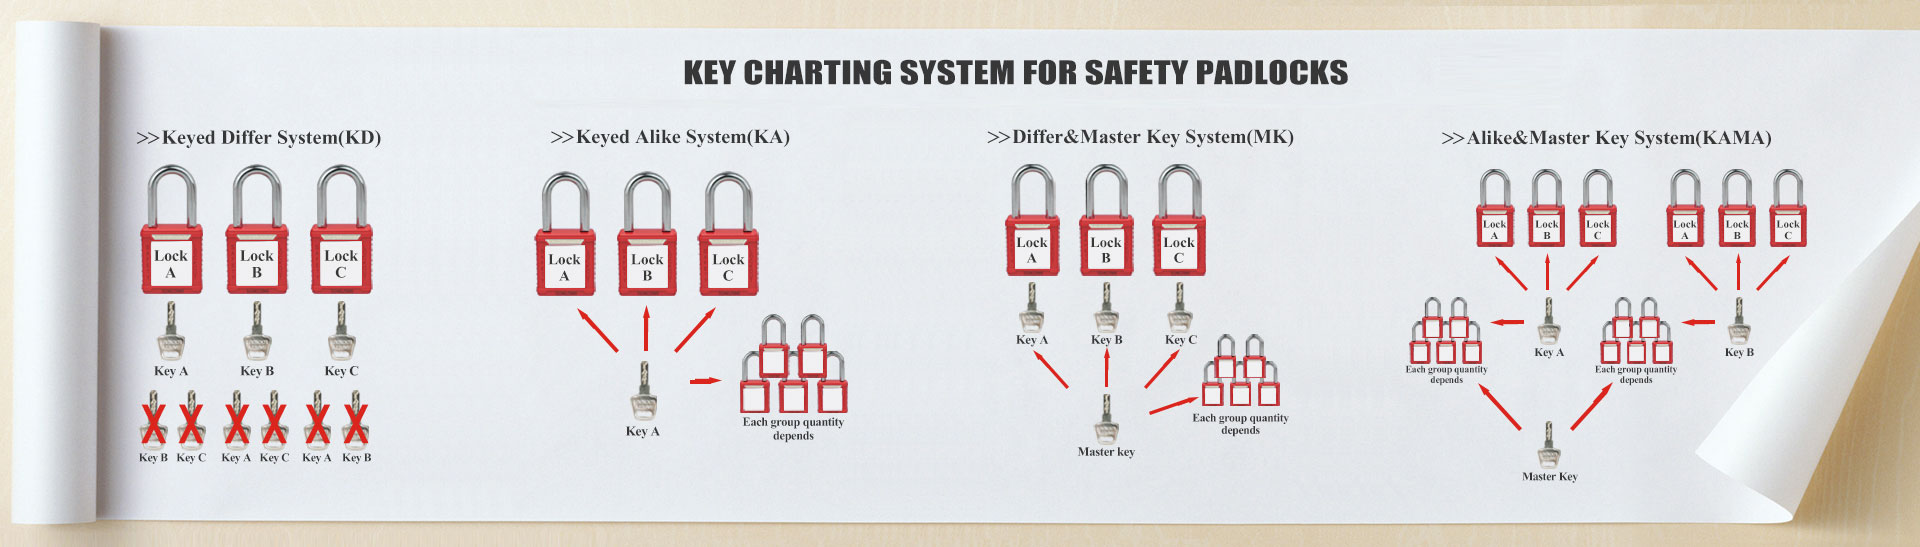 Key Charting System For Safety Padlocks